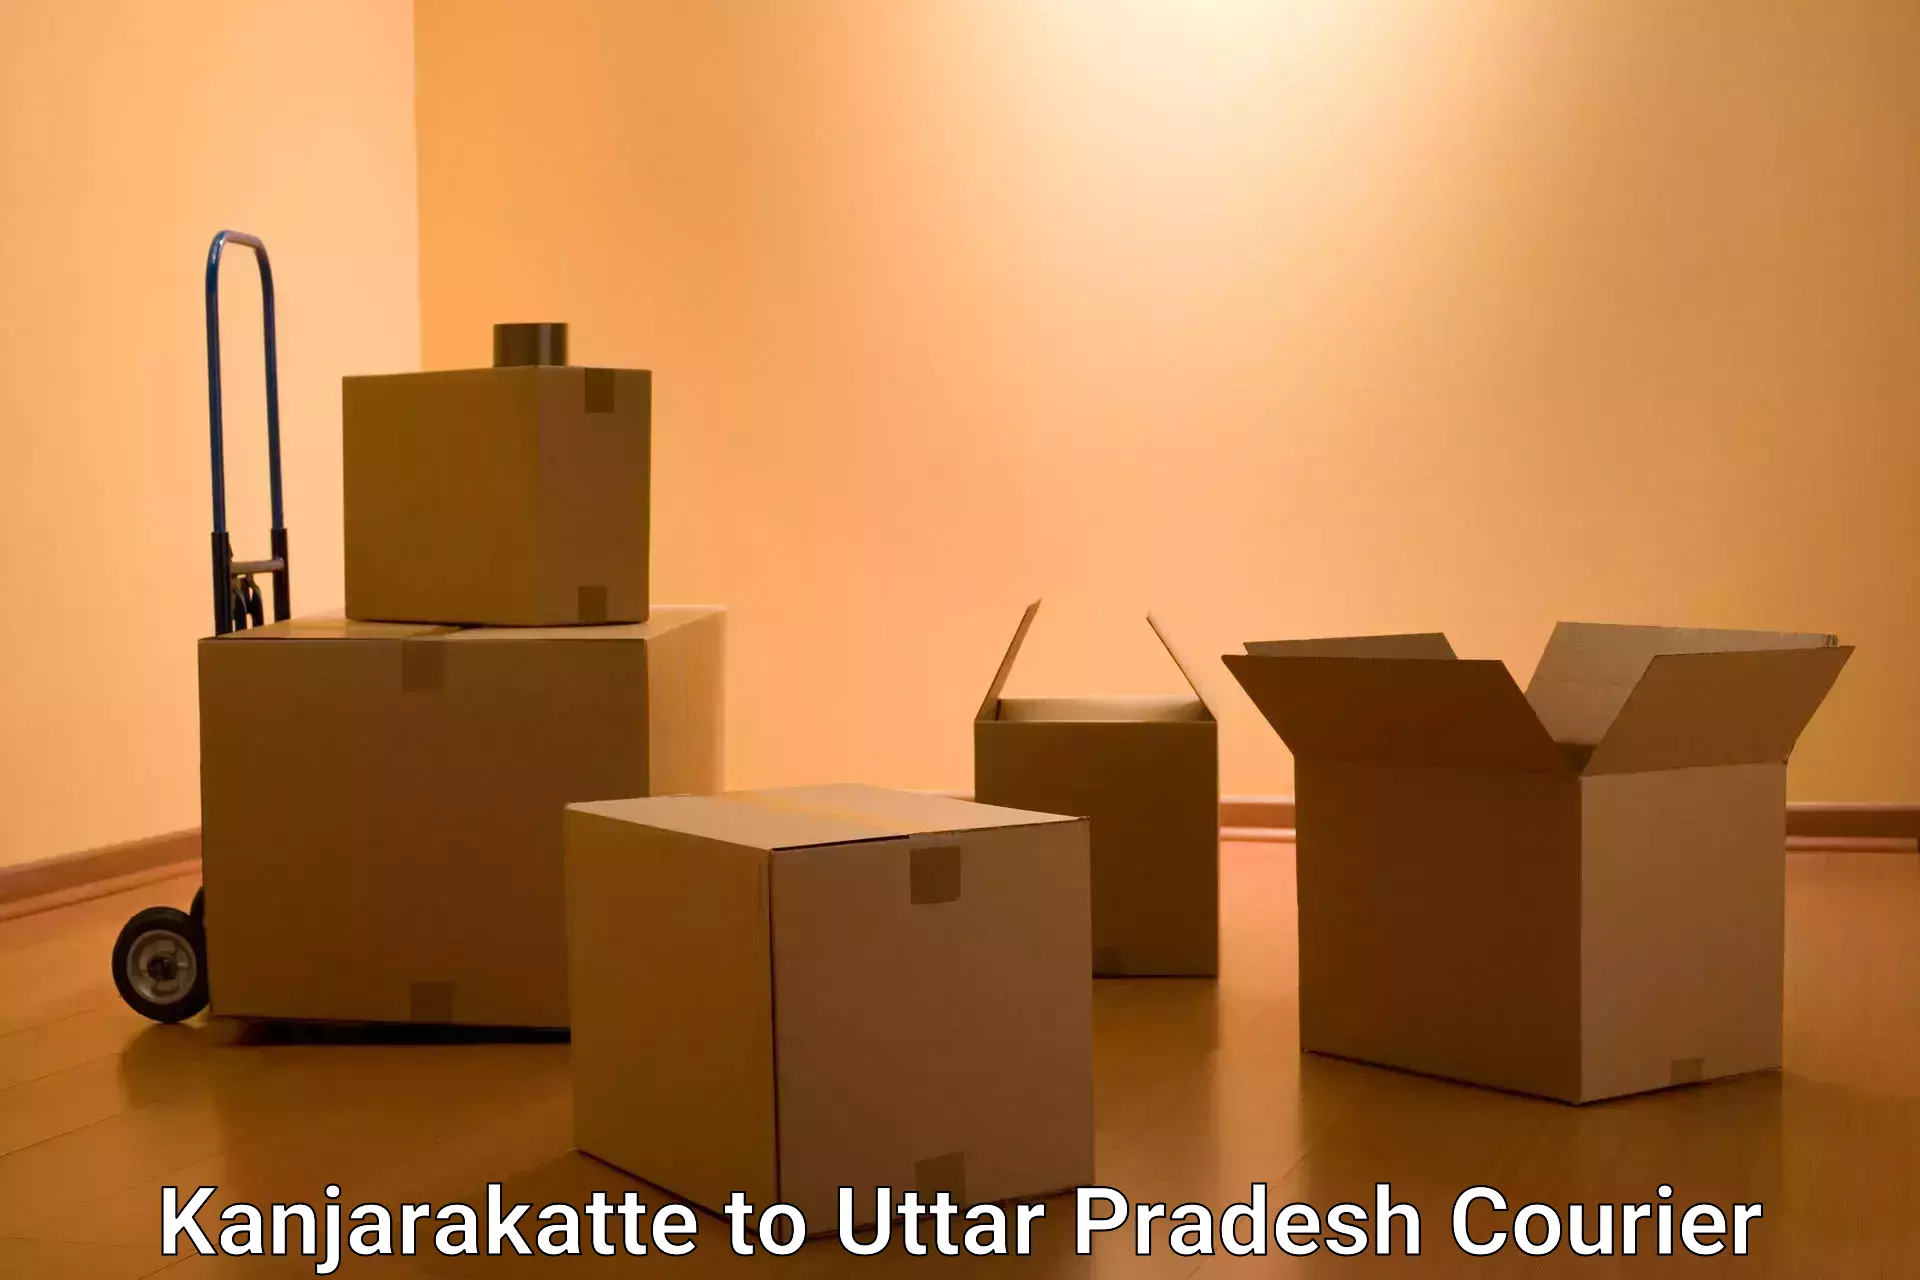 State-of-the-art courier technology Kanjarakatte to Uttar Pradesh